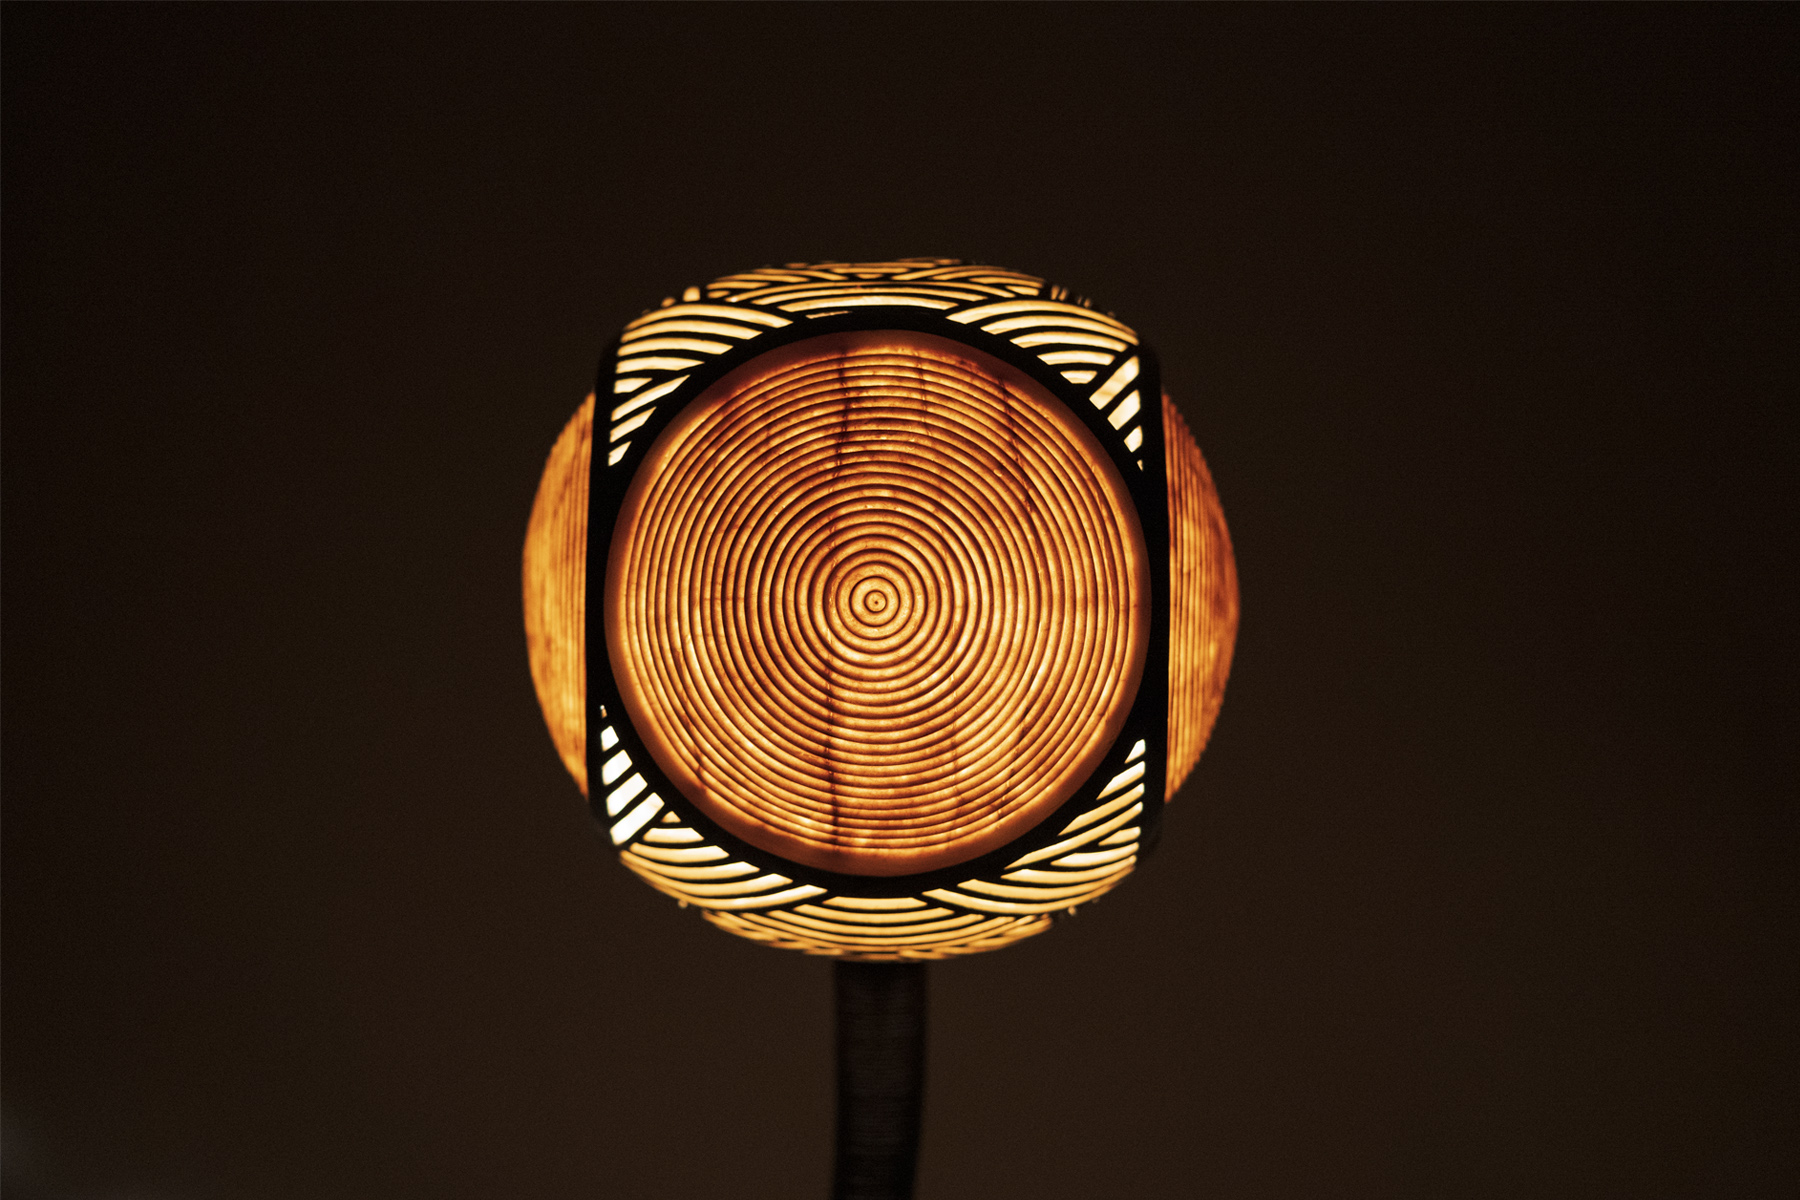 Erleuchten VII - "Payseur" Table Lamp for sale For Super Rich